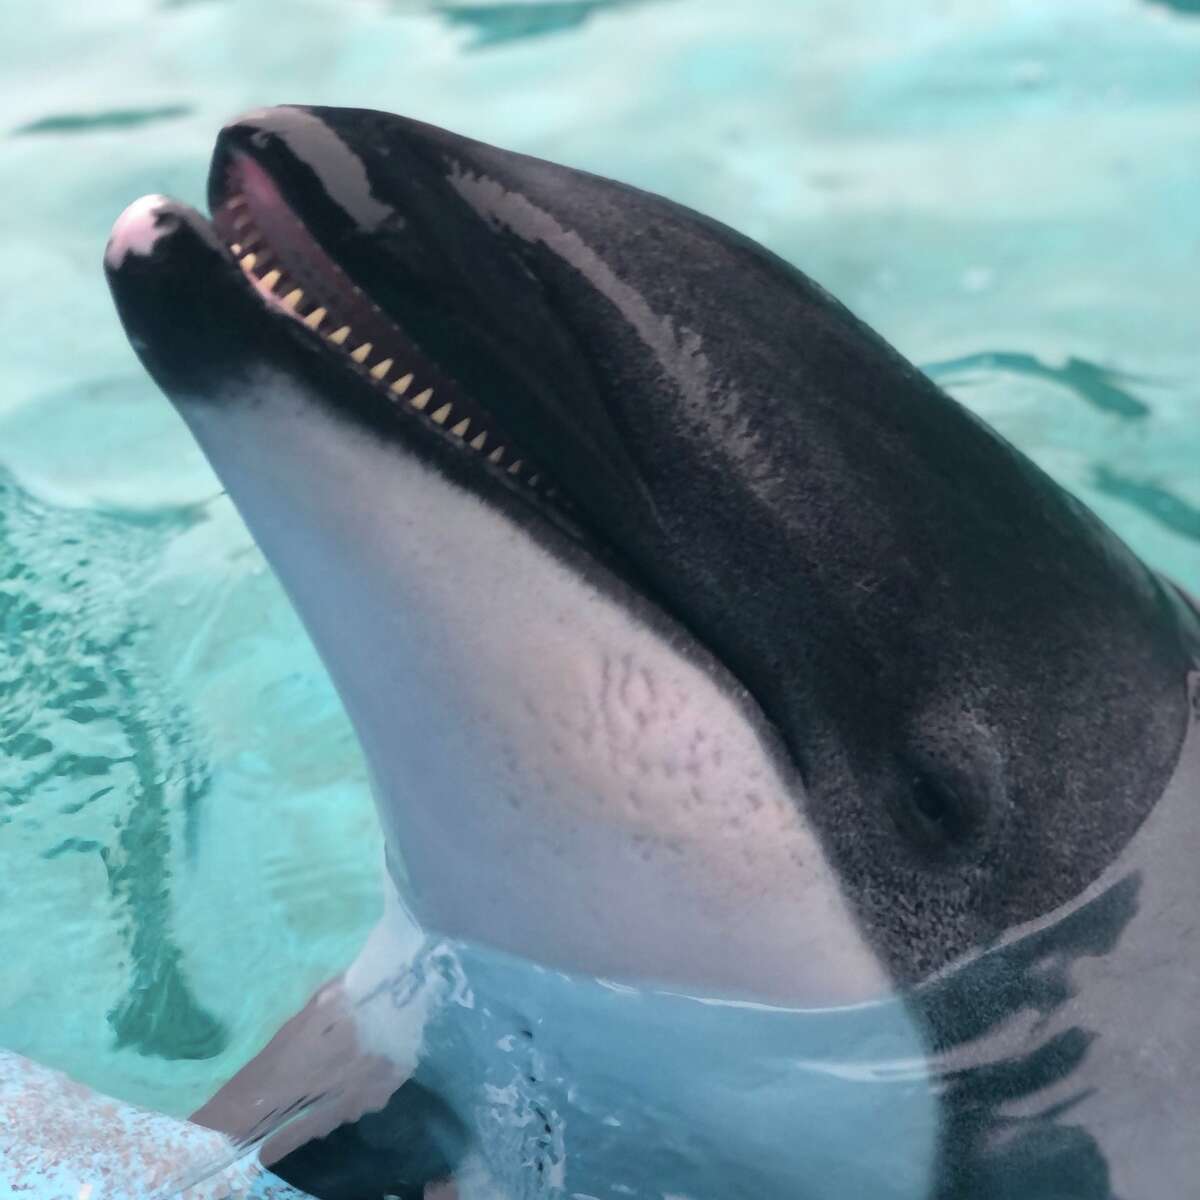 SeaWorld San Antonio's Betty the dolphin has died.